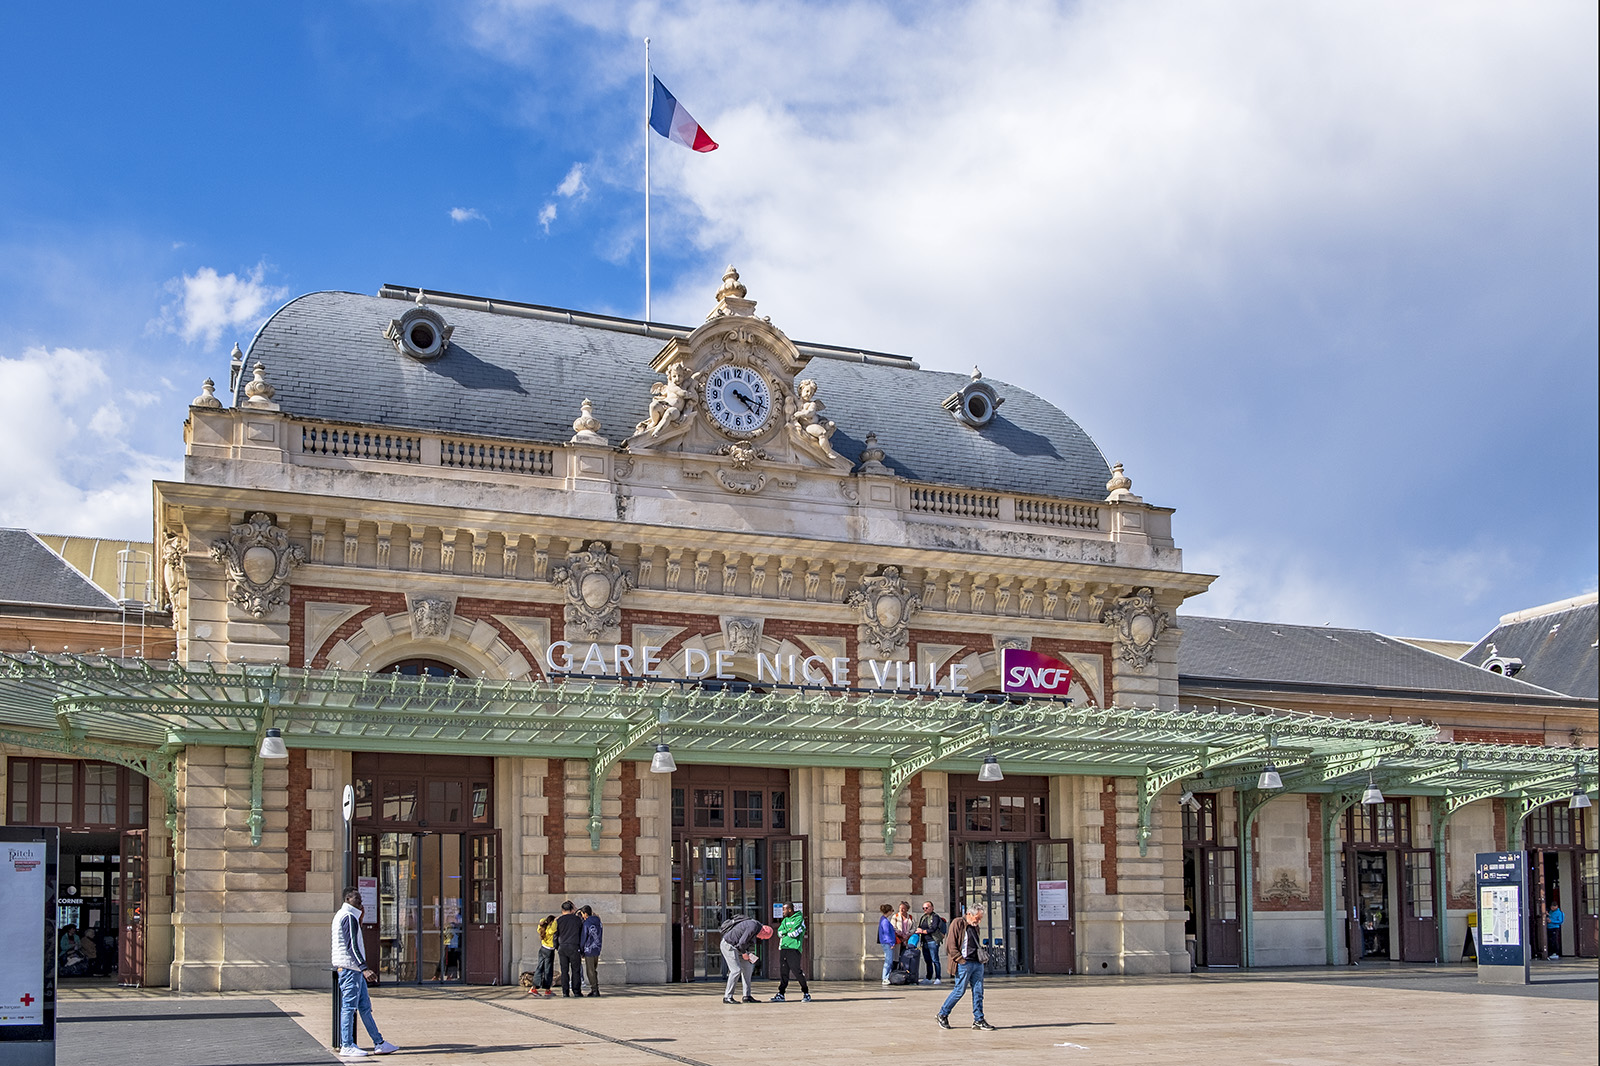 Gare de Nice Ville 